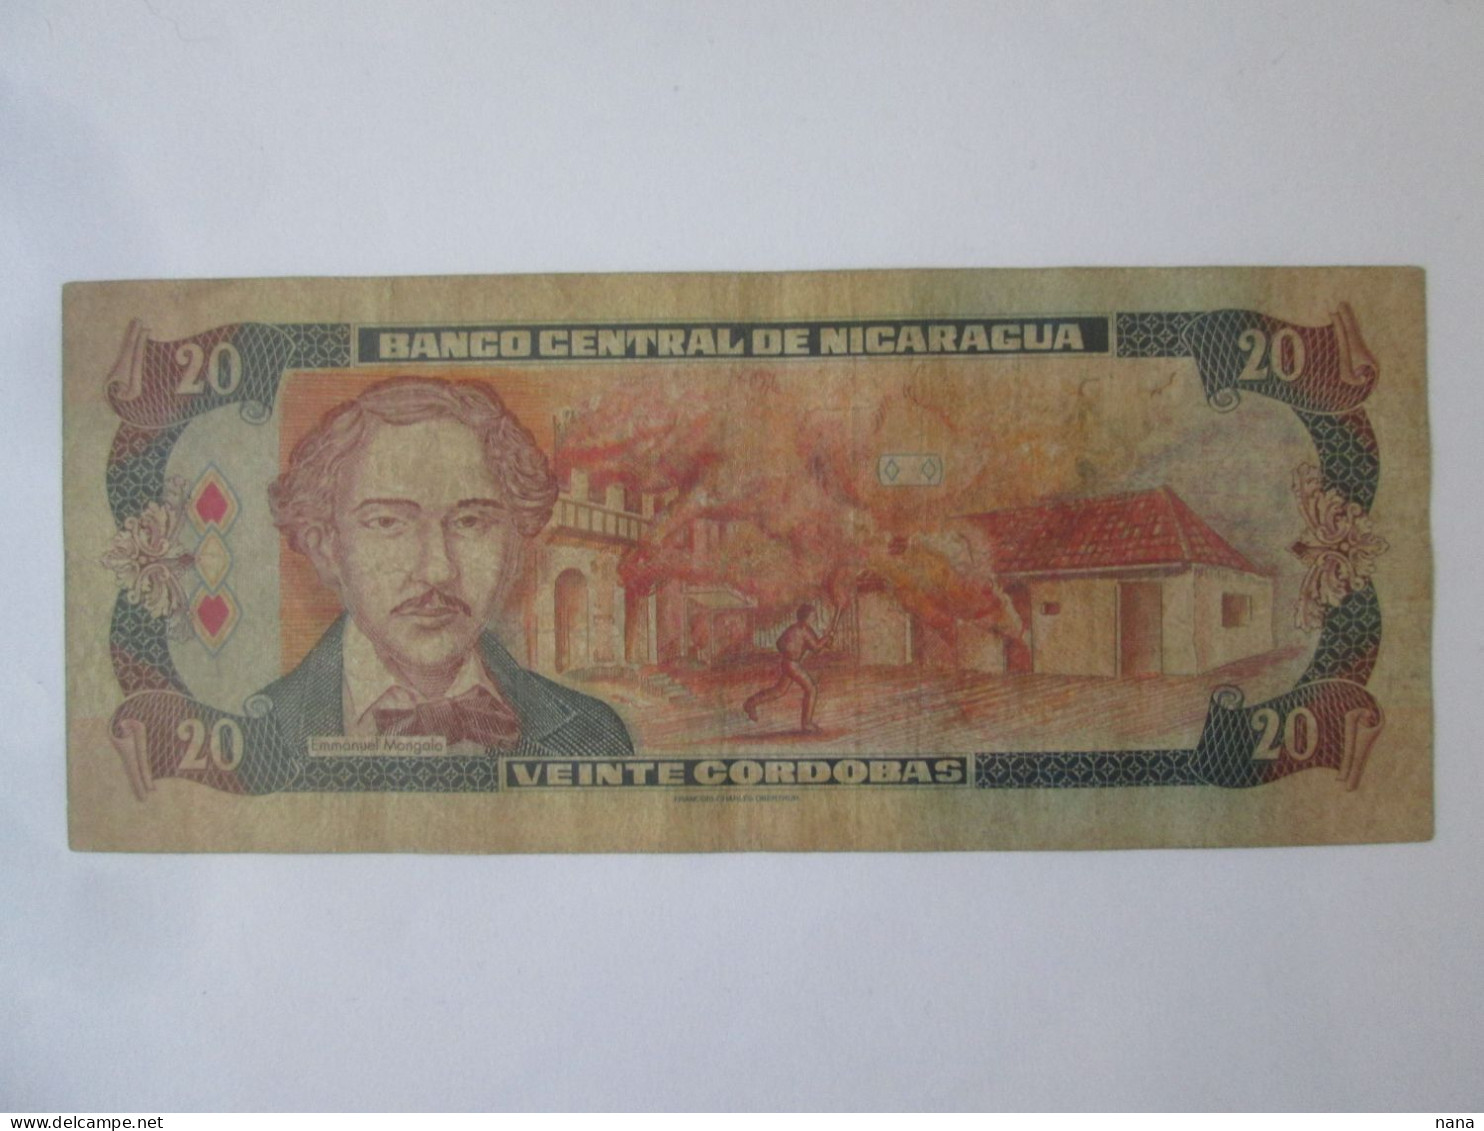 Rare! Nicaragua 20 Cordobas 1995 Banknote See Pictures - Nicaragua